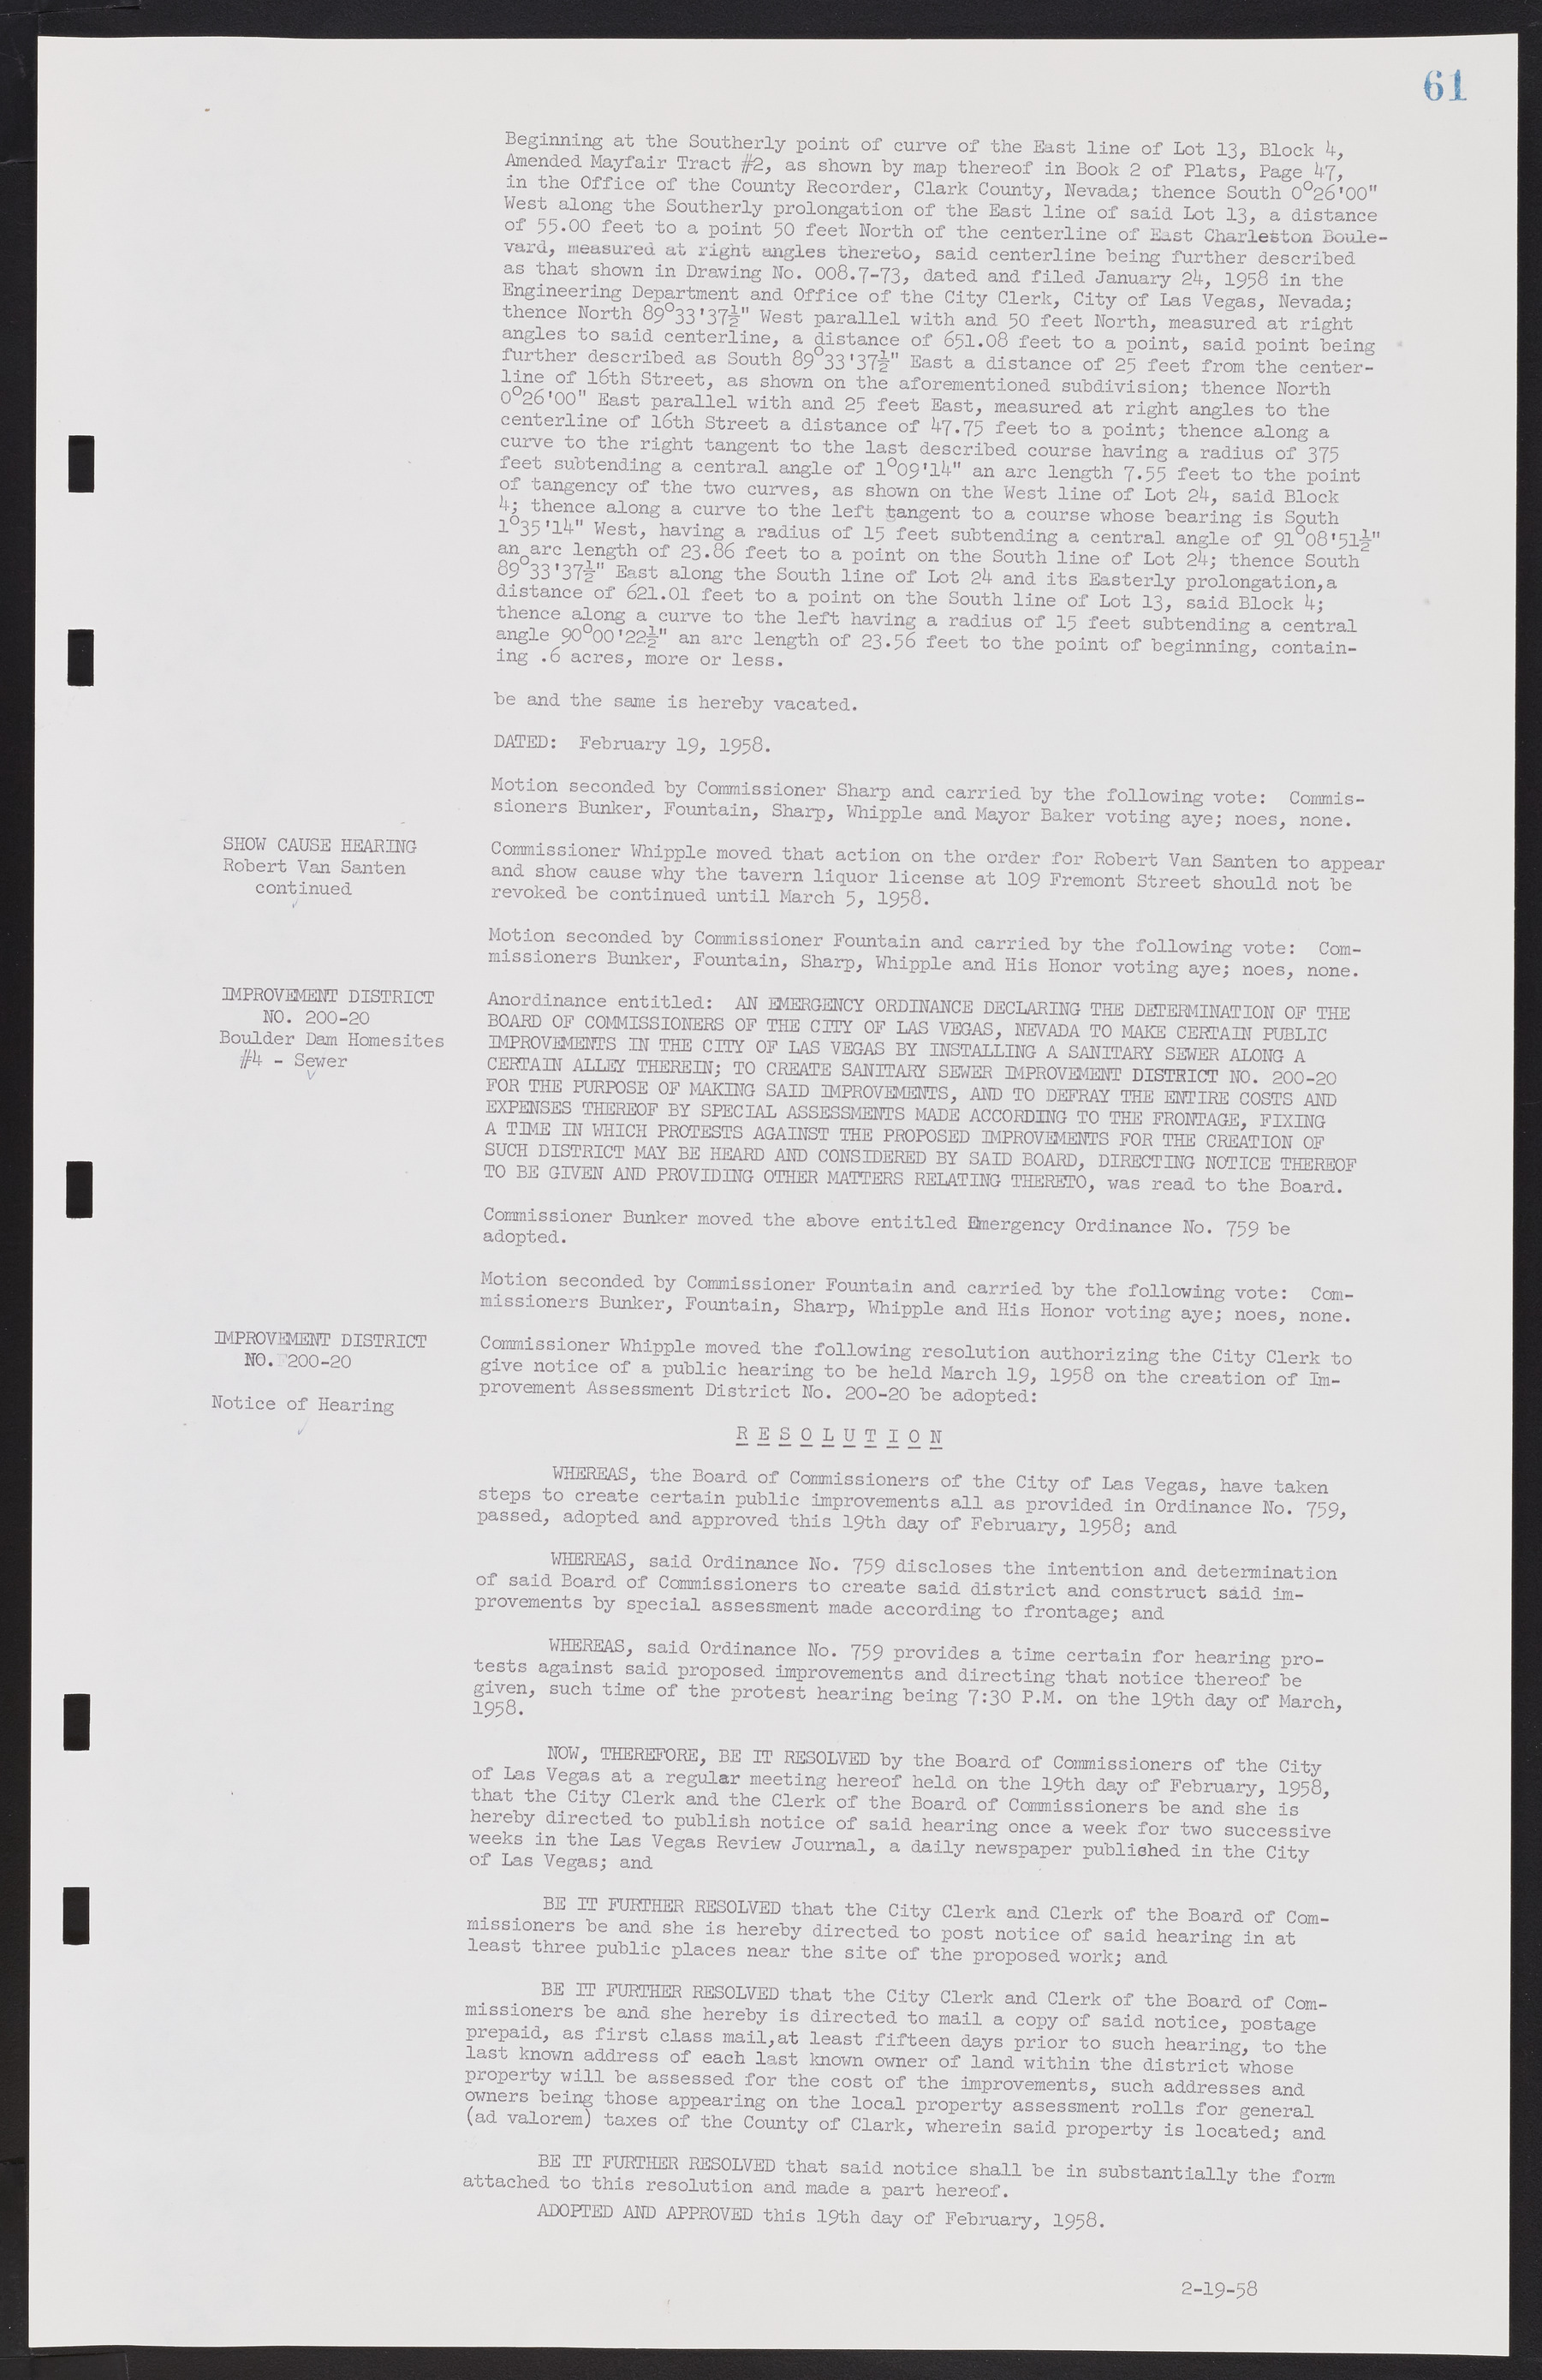 Las Vegas City Commission Minutes, November 20, 1957 to December 2, 1959, lvc000011-65